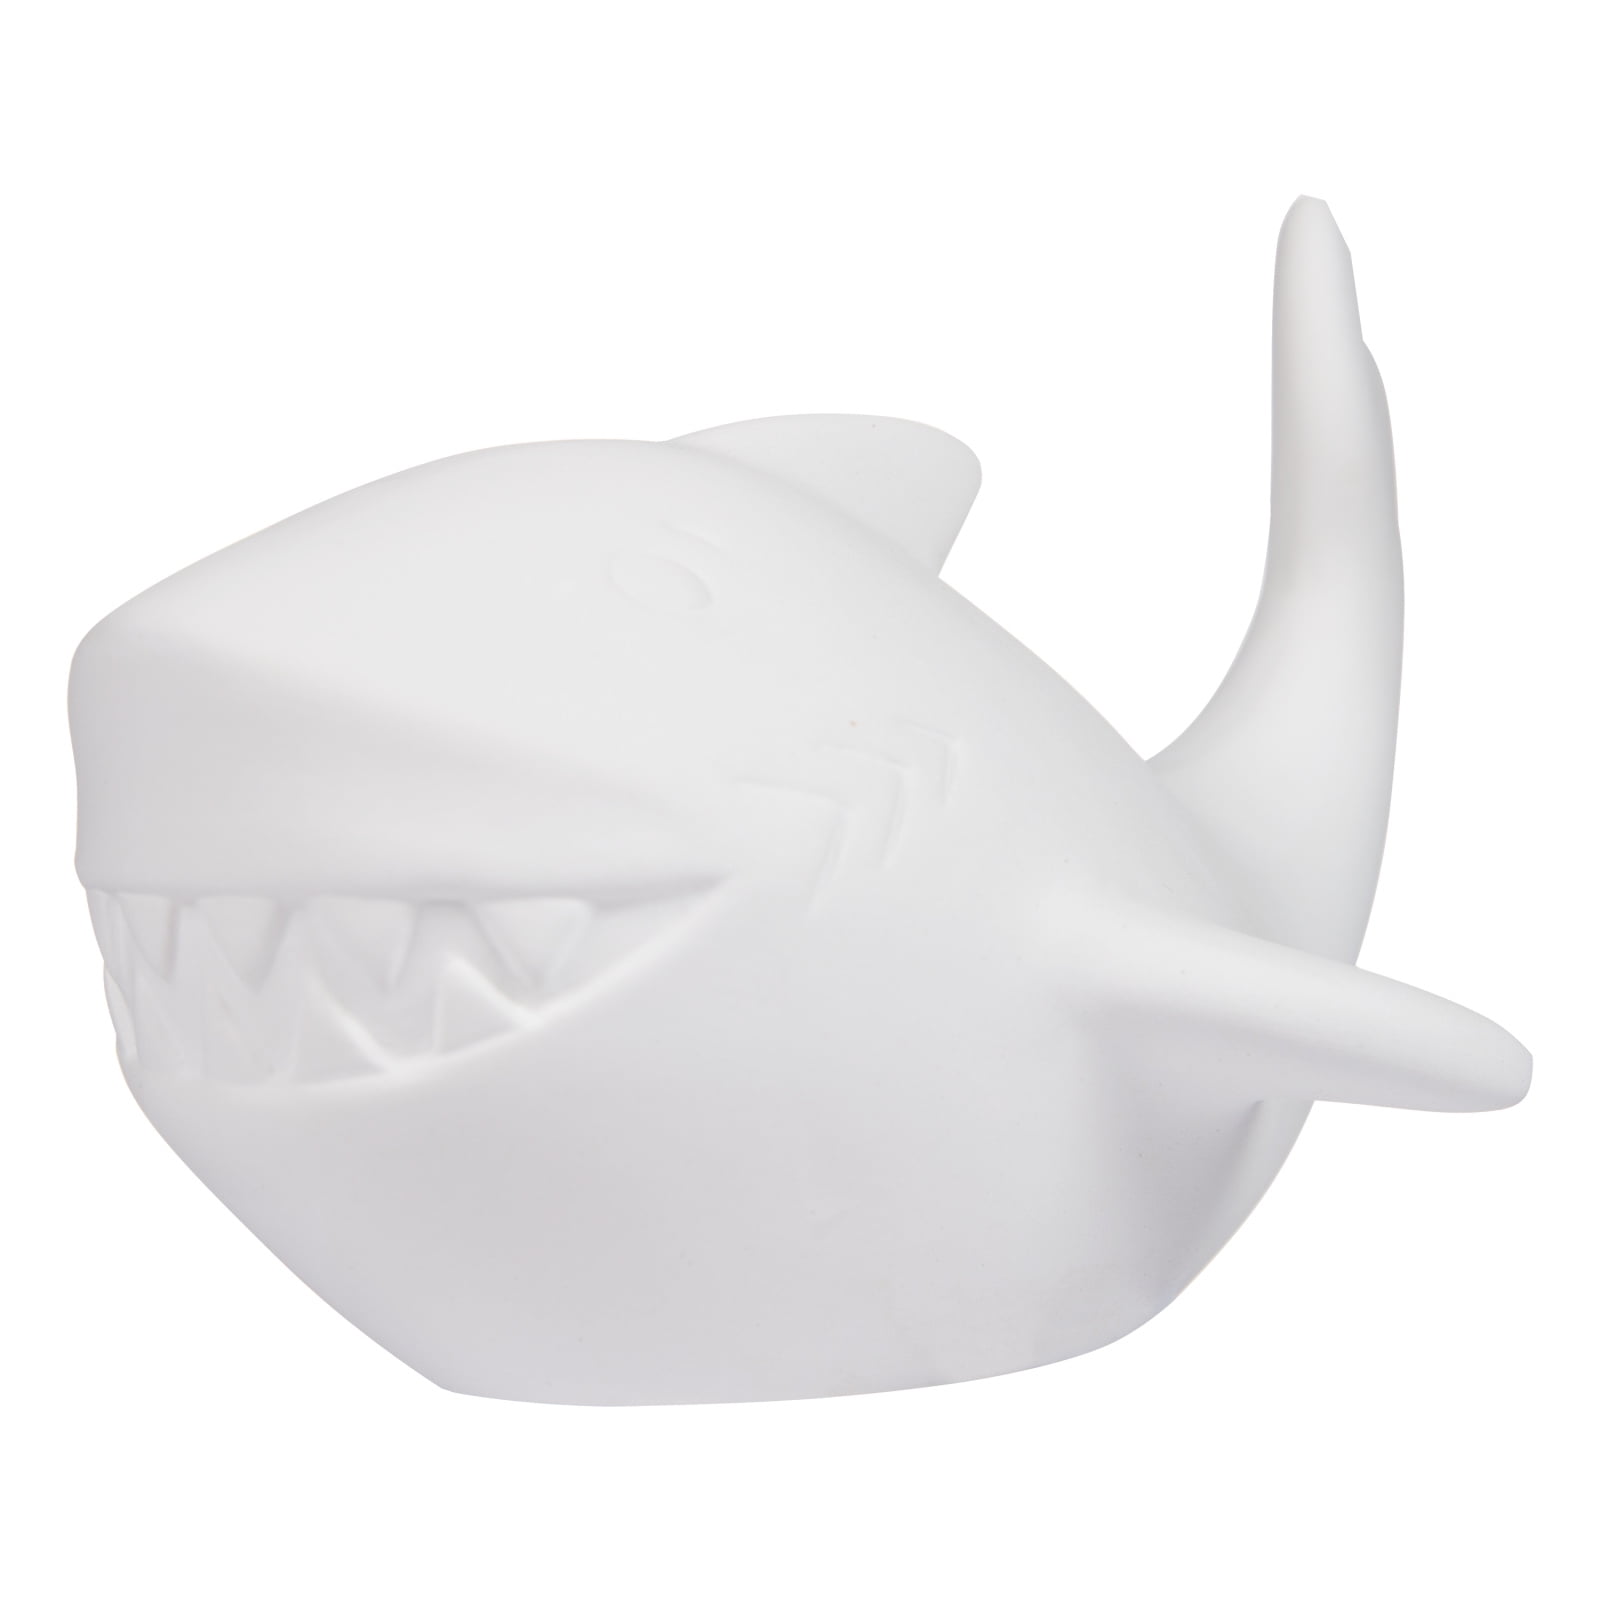 Hello Hobby Paintable Figurine Shark, 3.85" Height